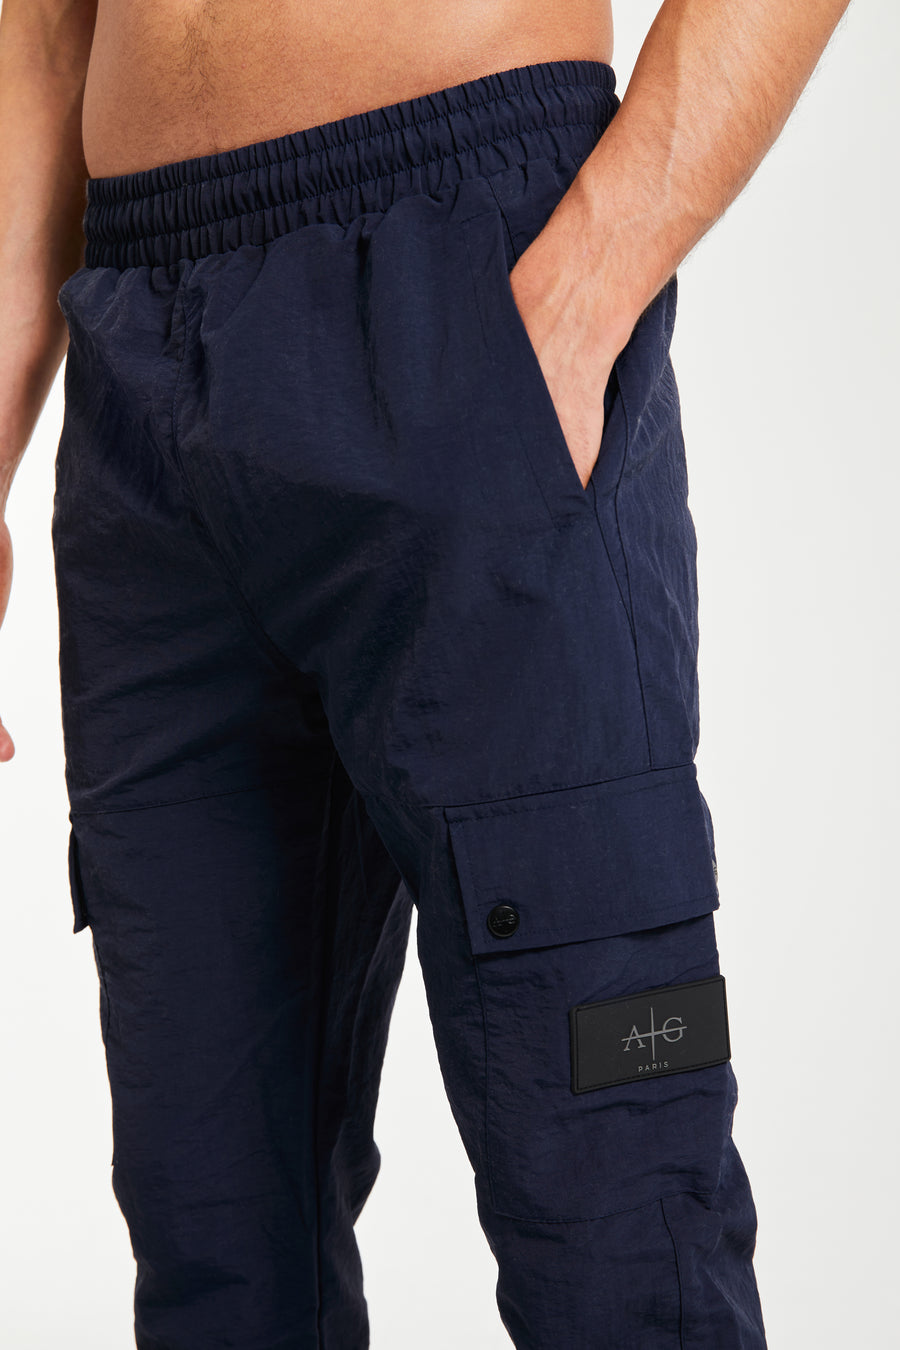 Men's cuffed cargo pants sale close up showing 'Avant Garde Paris' logo in navy blue